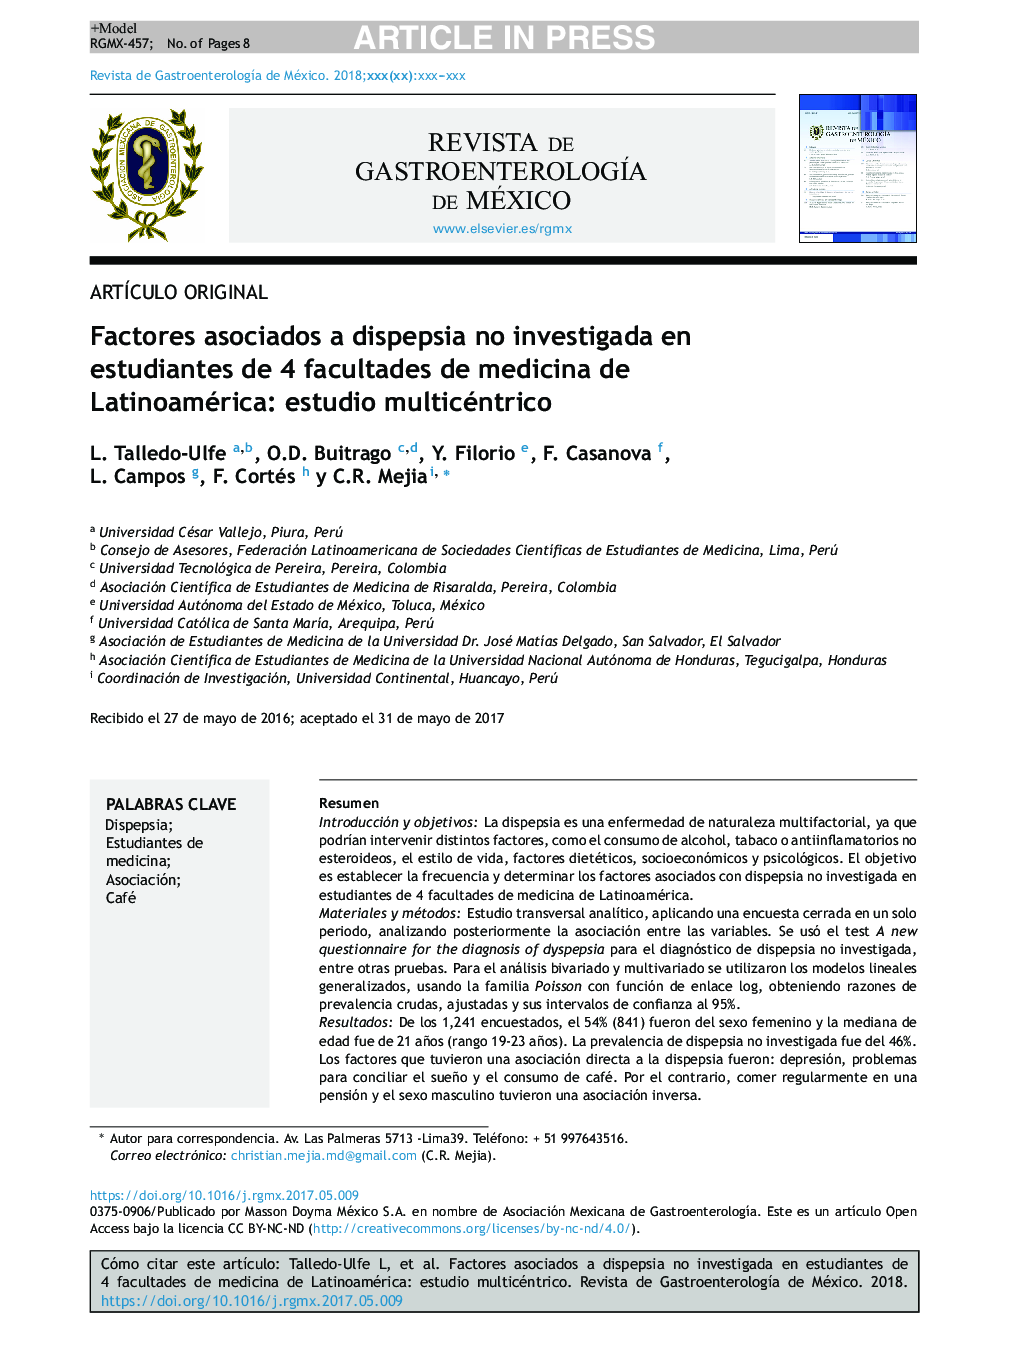 Factores asociados a dispepsia no investigada en estudiantes de 4 facultades de medicina de Latinoamérica: estudio multicéntrico